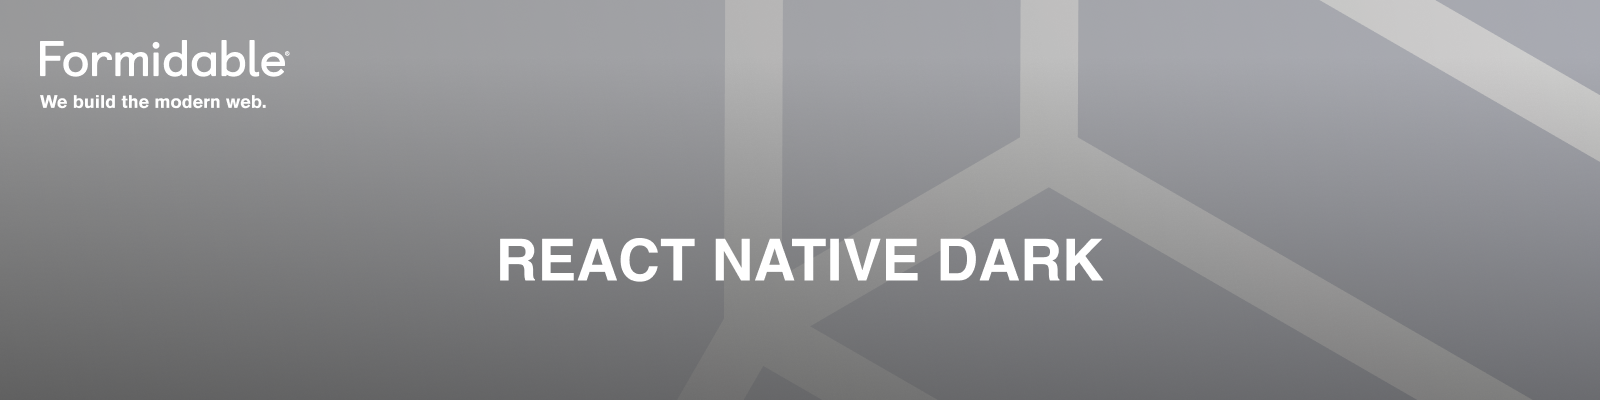 React Native Dark — Formidable, We build the modern web